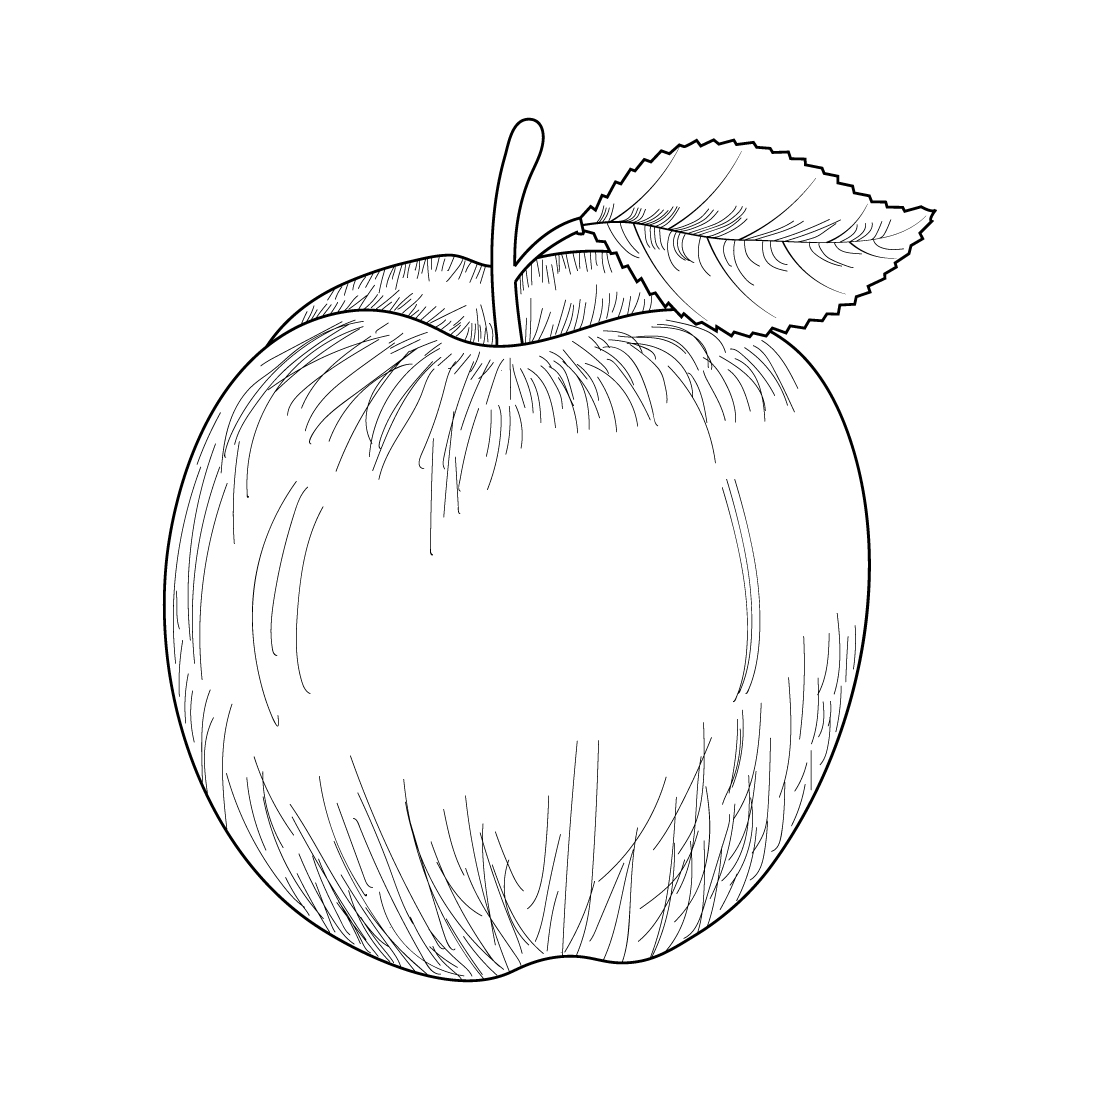 Apple Fruits outline illustration vector preview image.